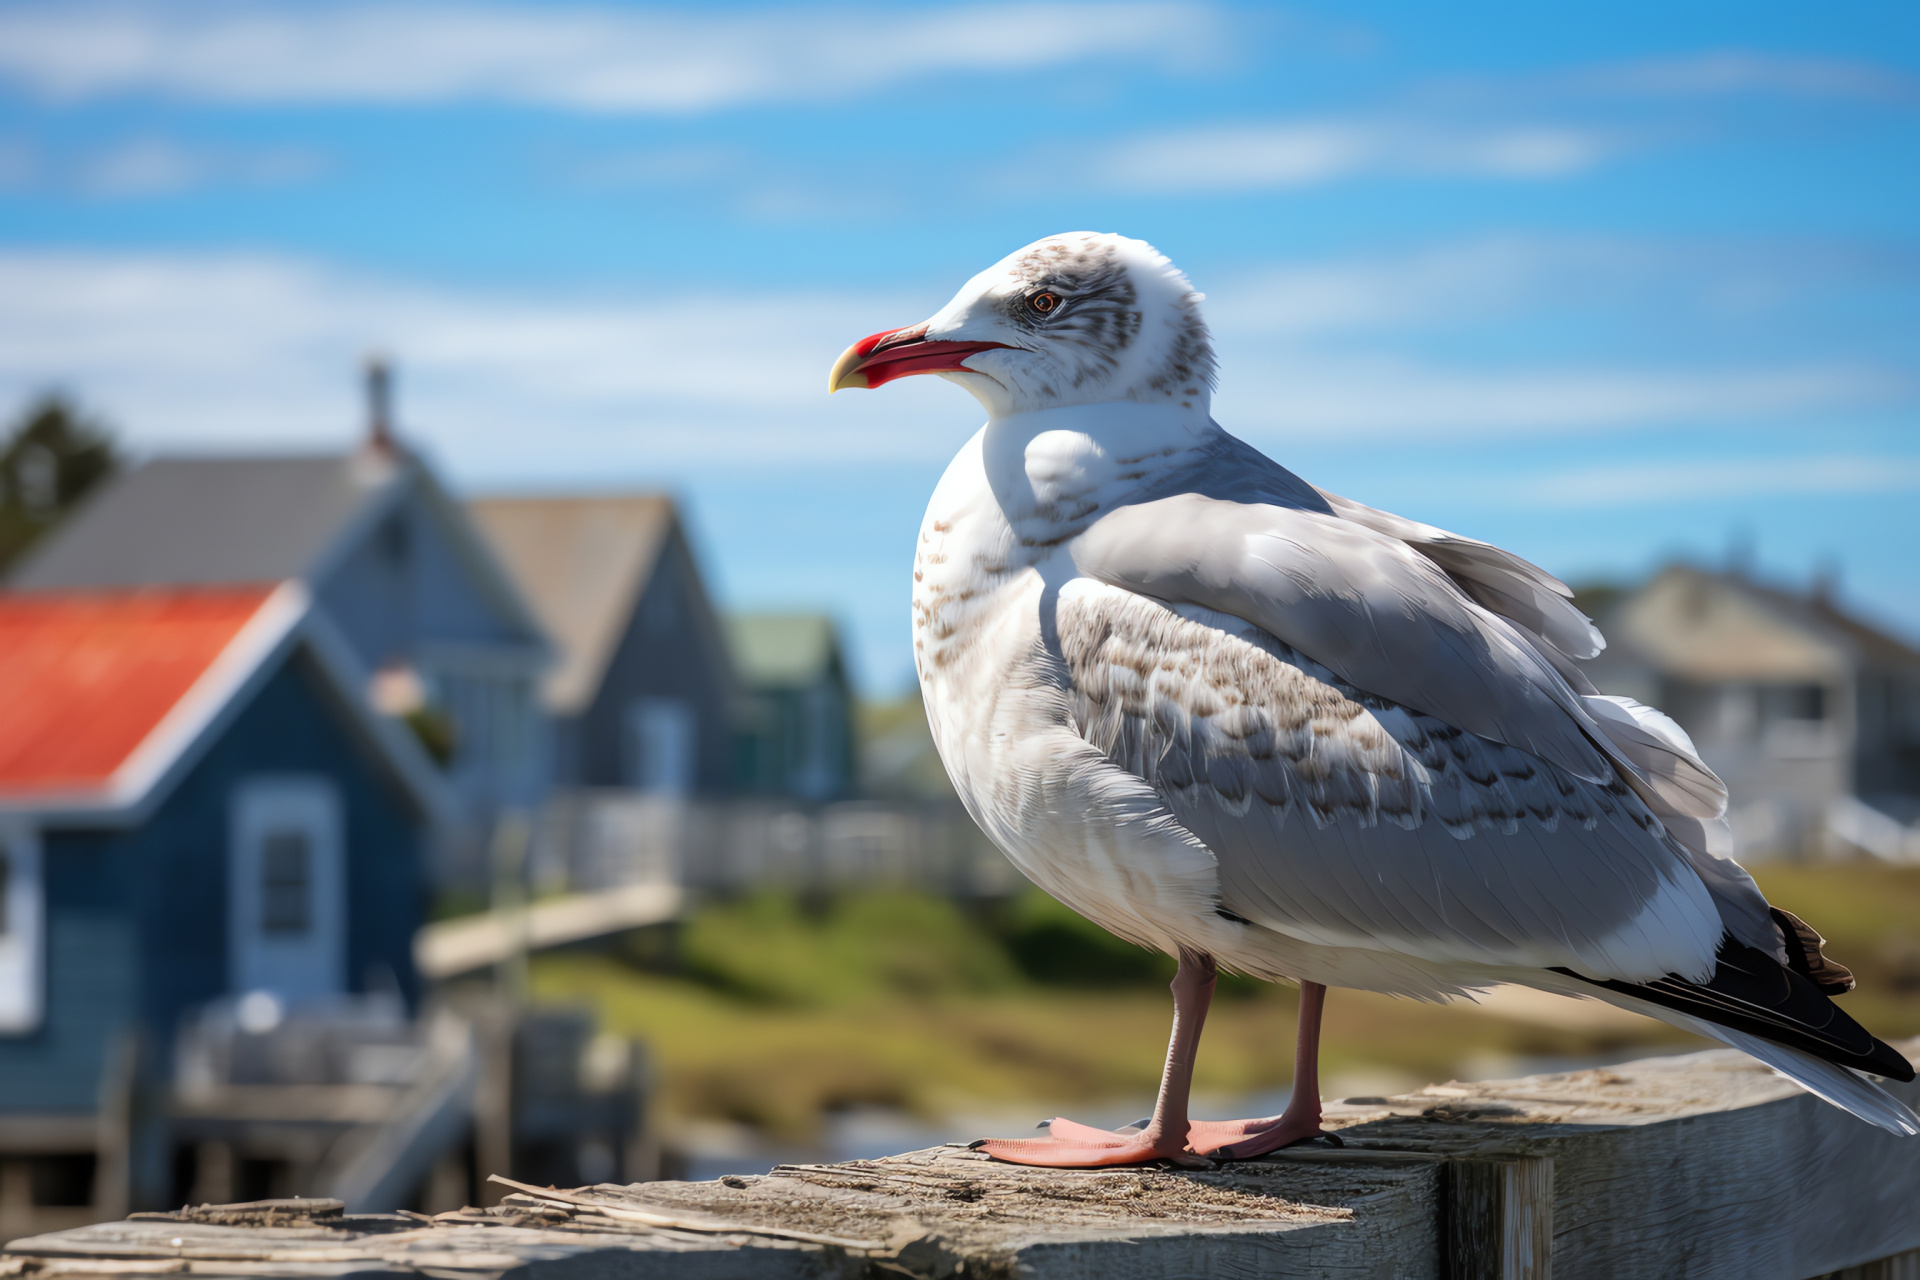 Avian coastal, Birdlife scenery, Seaside habitat, Seagull perching, Ocean shores, HD Desktop Image